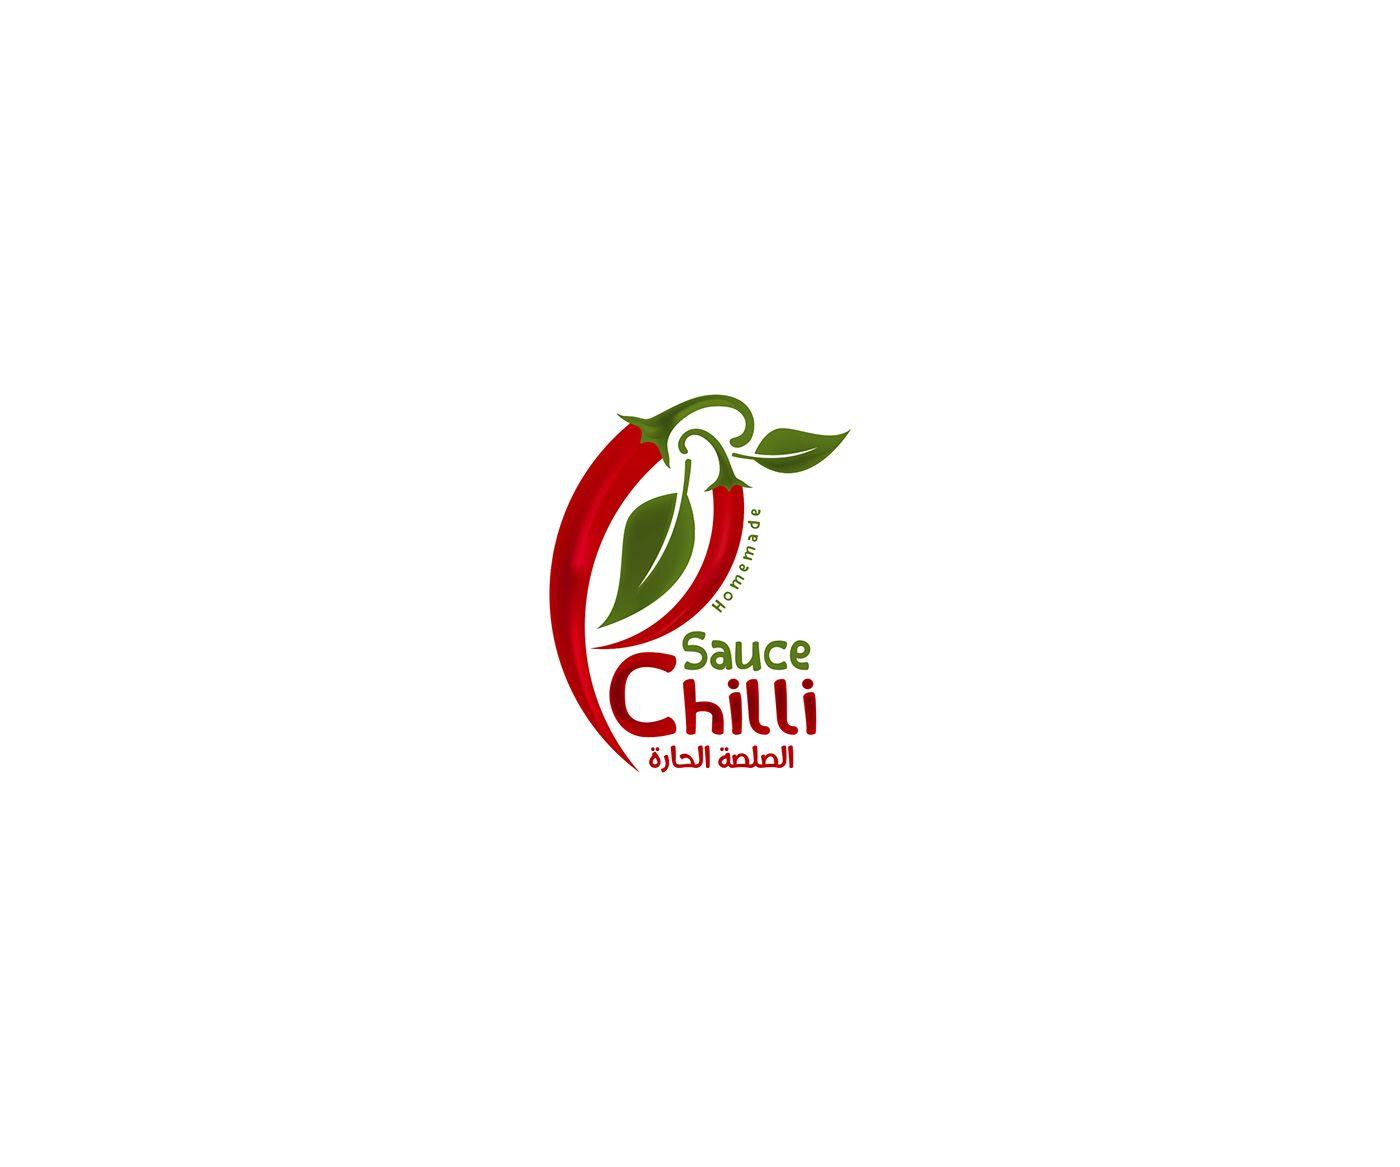 Sauce Logo - Chilli Sauce Logo Design